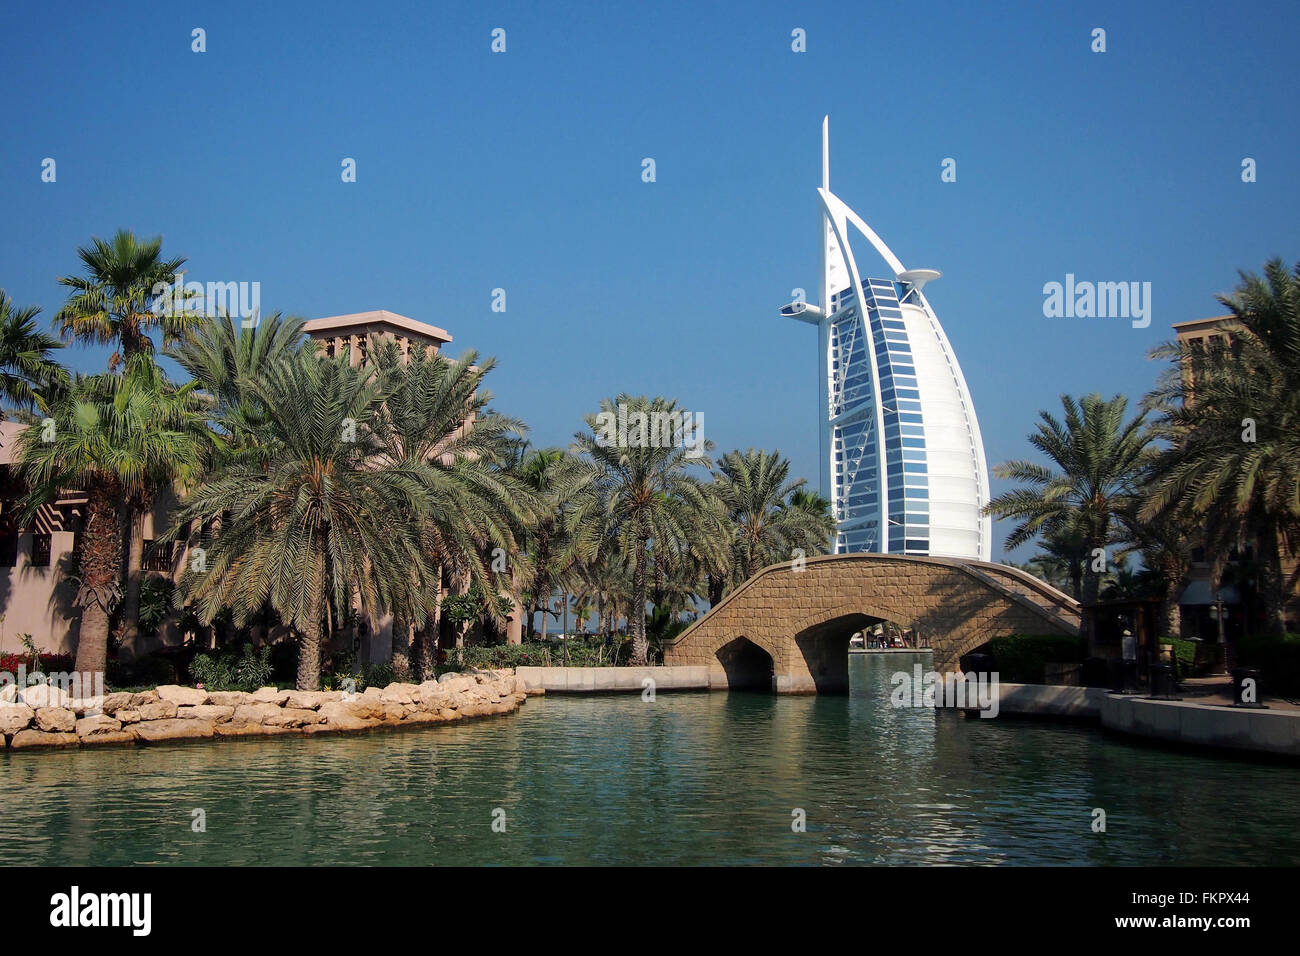 The Burj al Arab hotel as seen from the Souk Madinat Jumeirah in Dubai, United Arab Emirates Stock Photo